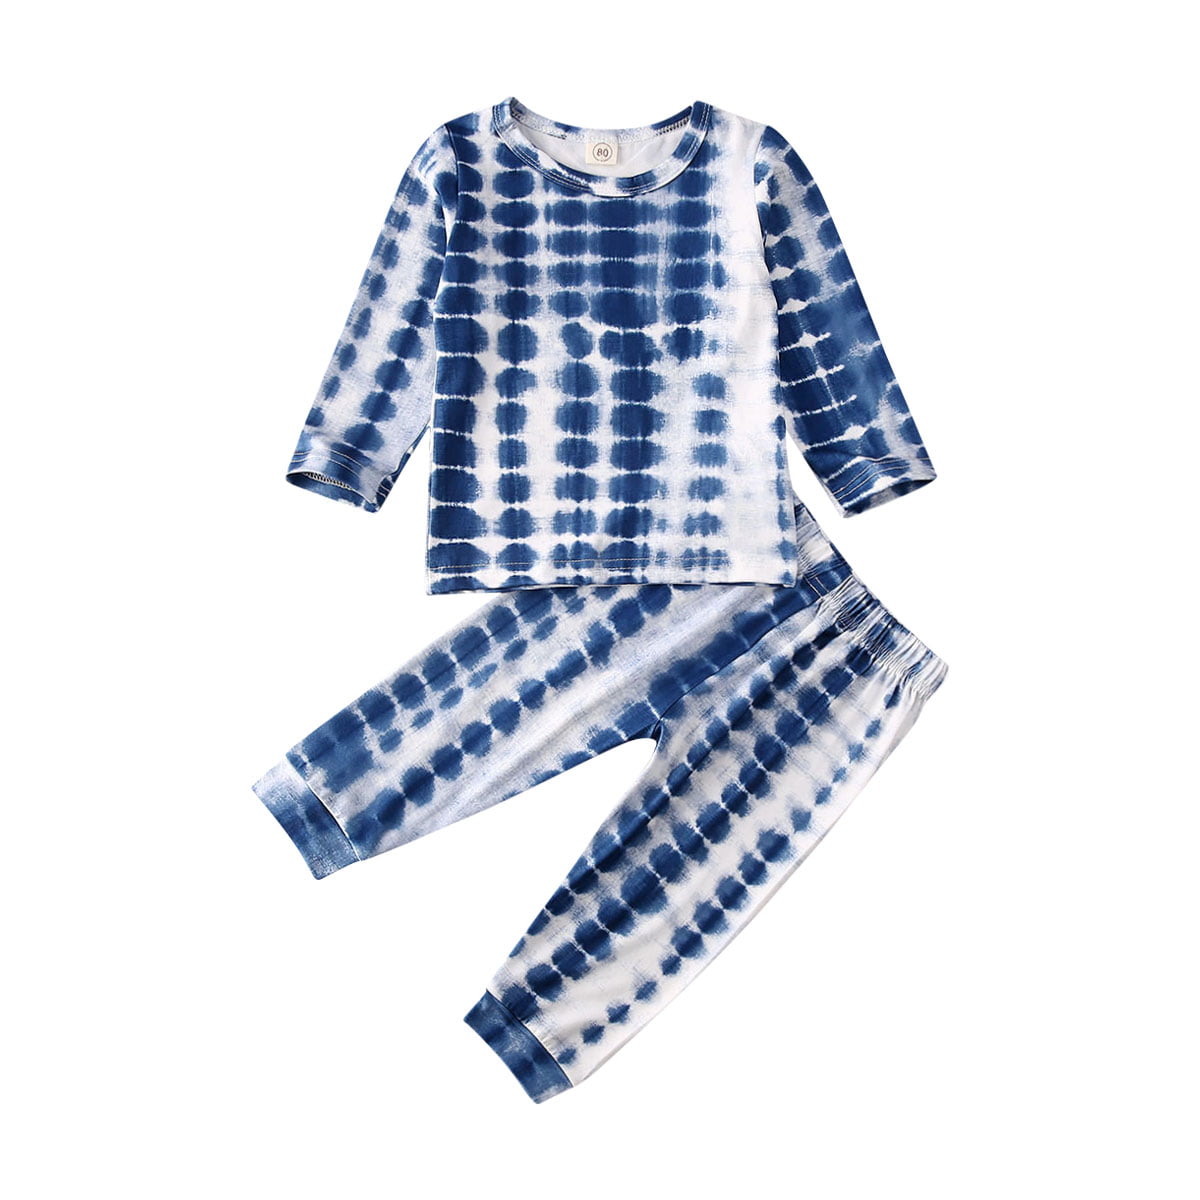 Burt's Bees girl  Organic Cotton Tie Dye top blue T-Shirt Size 5T Toddler New 